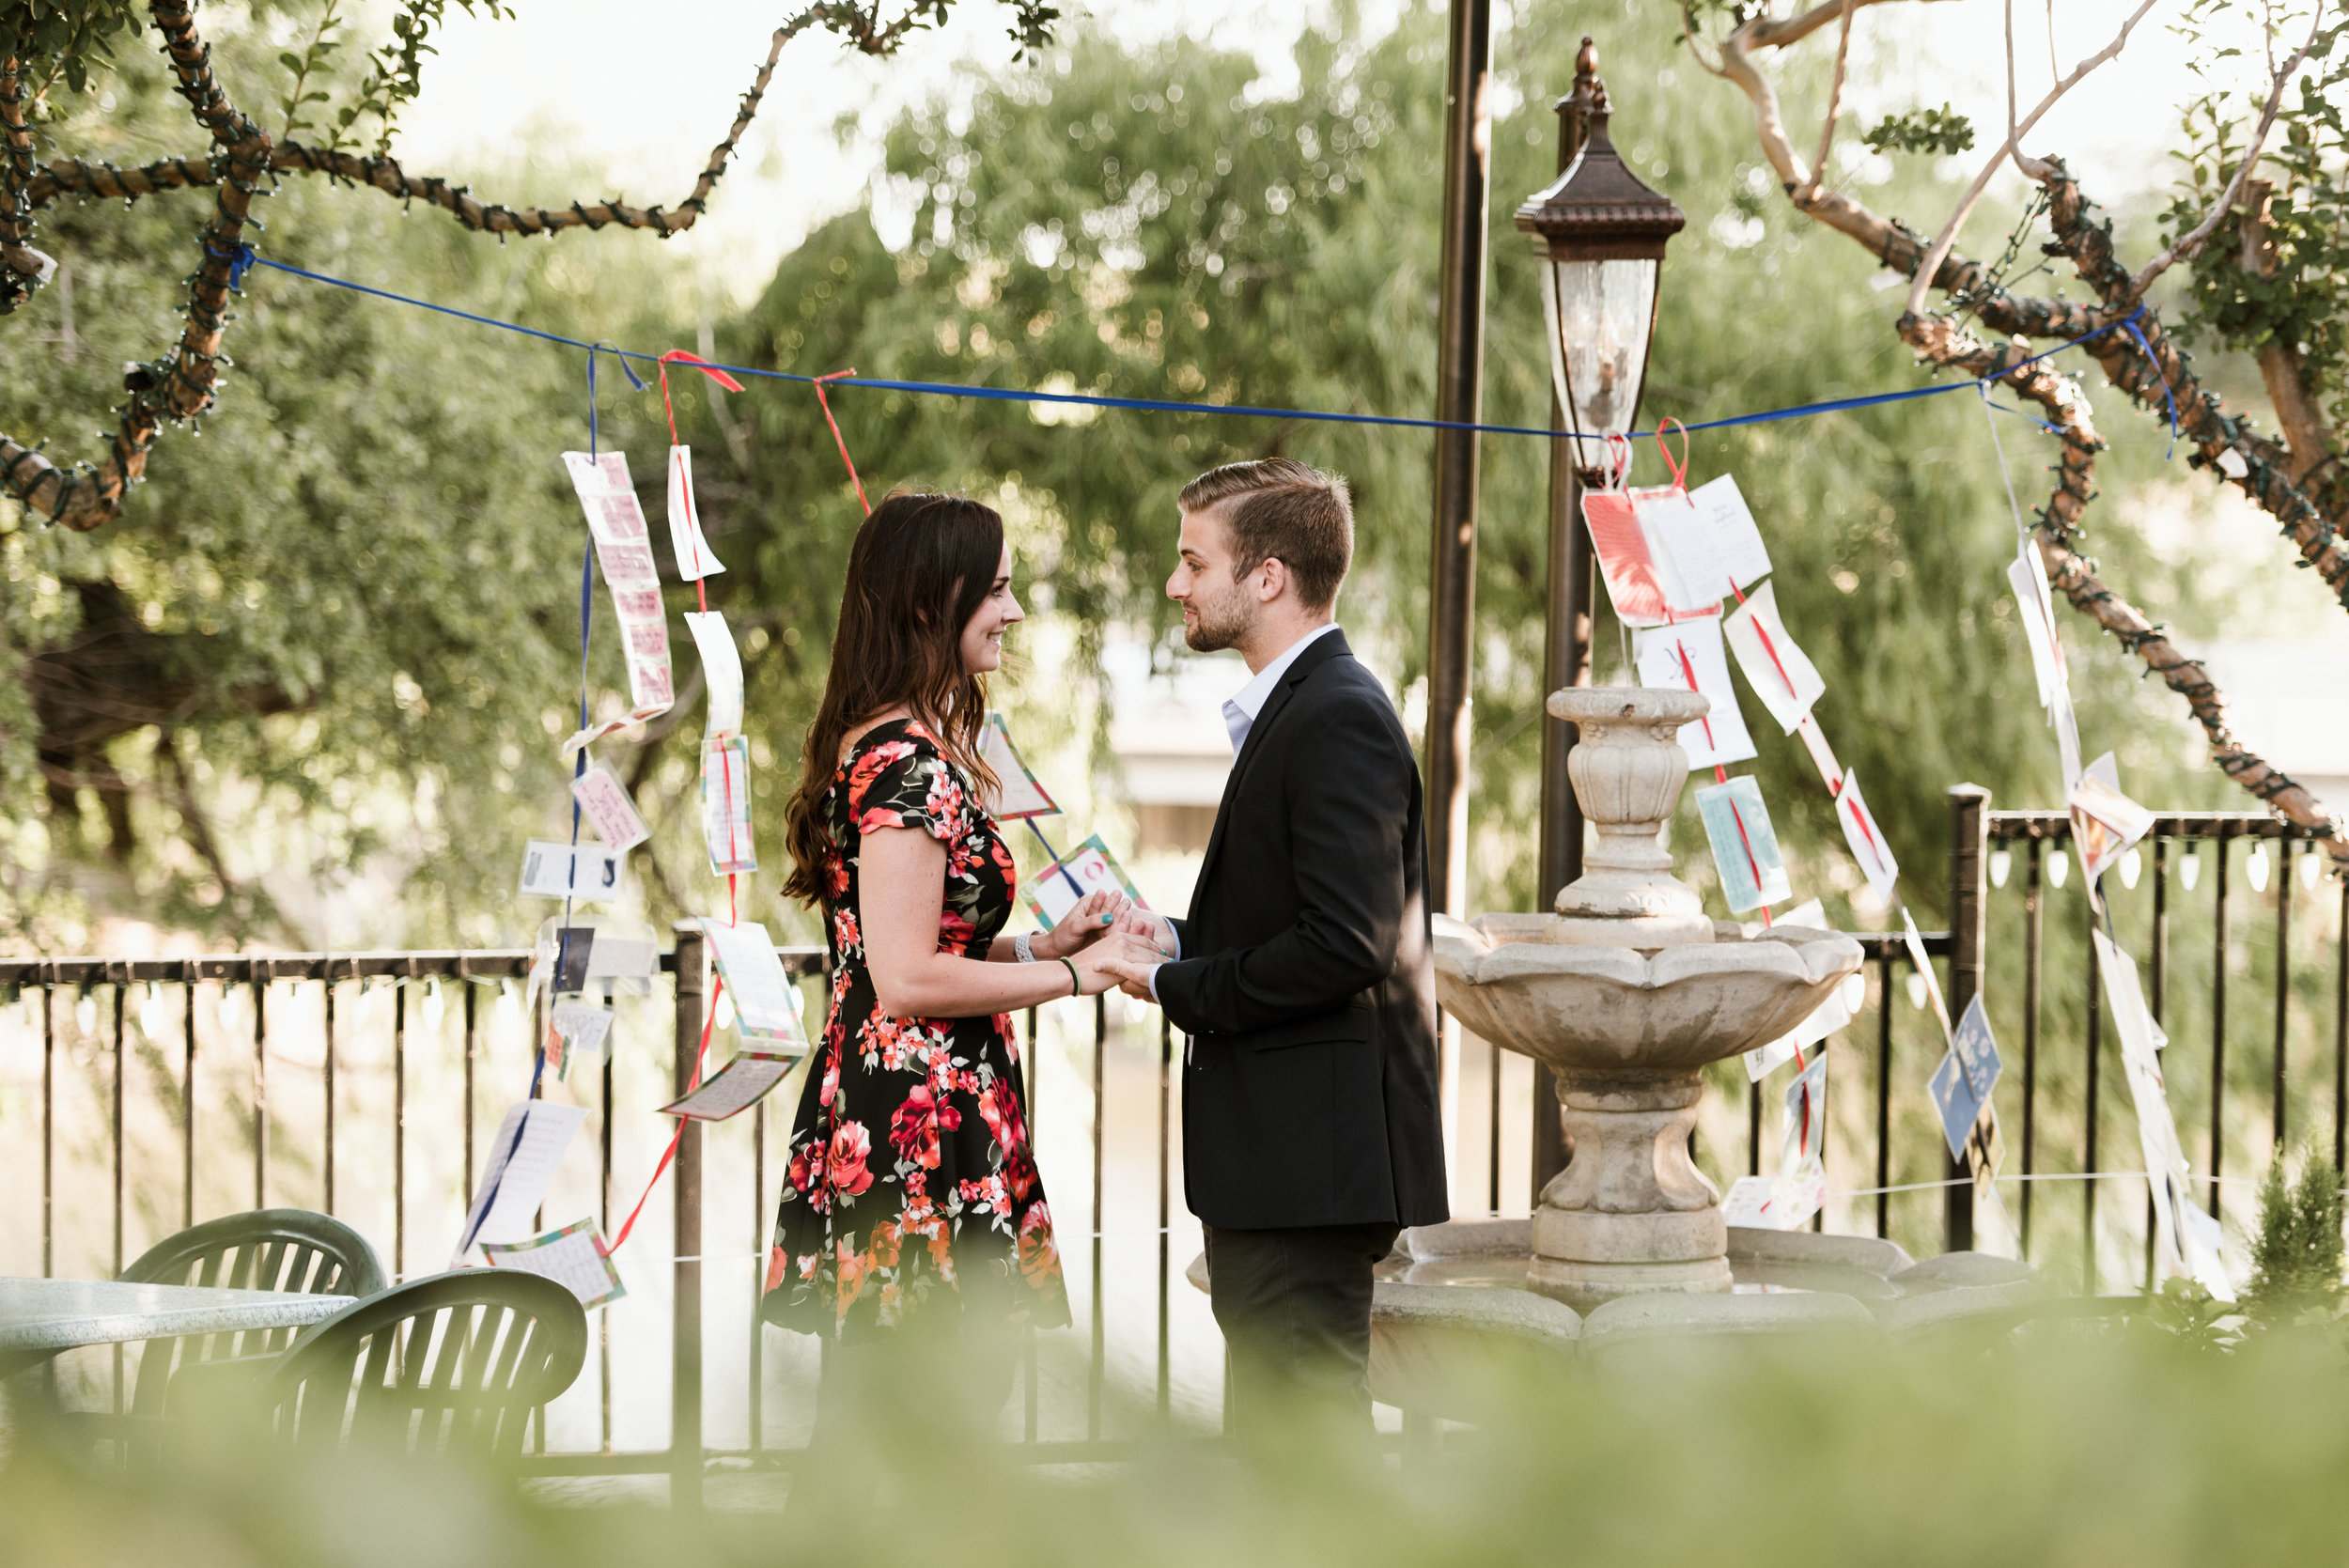  surprise dallas proposal | dallas photographer photographer | Fort Worth wedding photographer | www.jordanmitchellphotography.com 